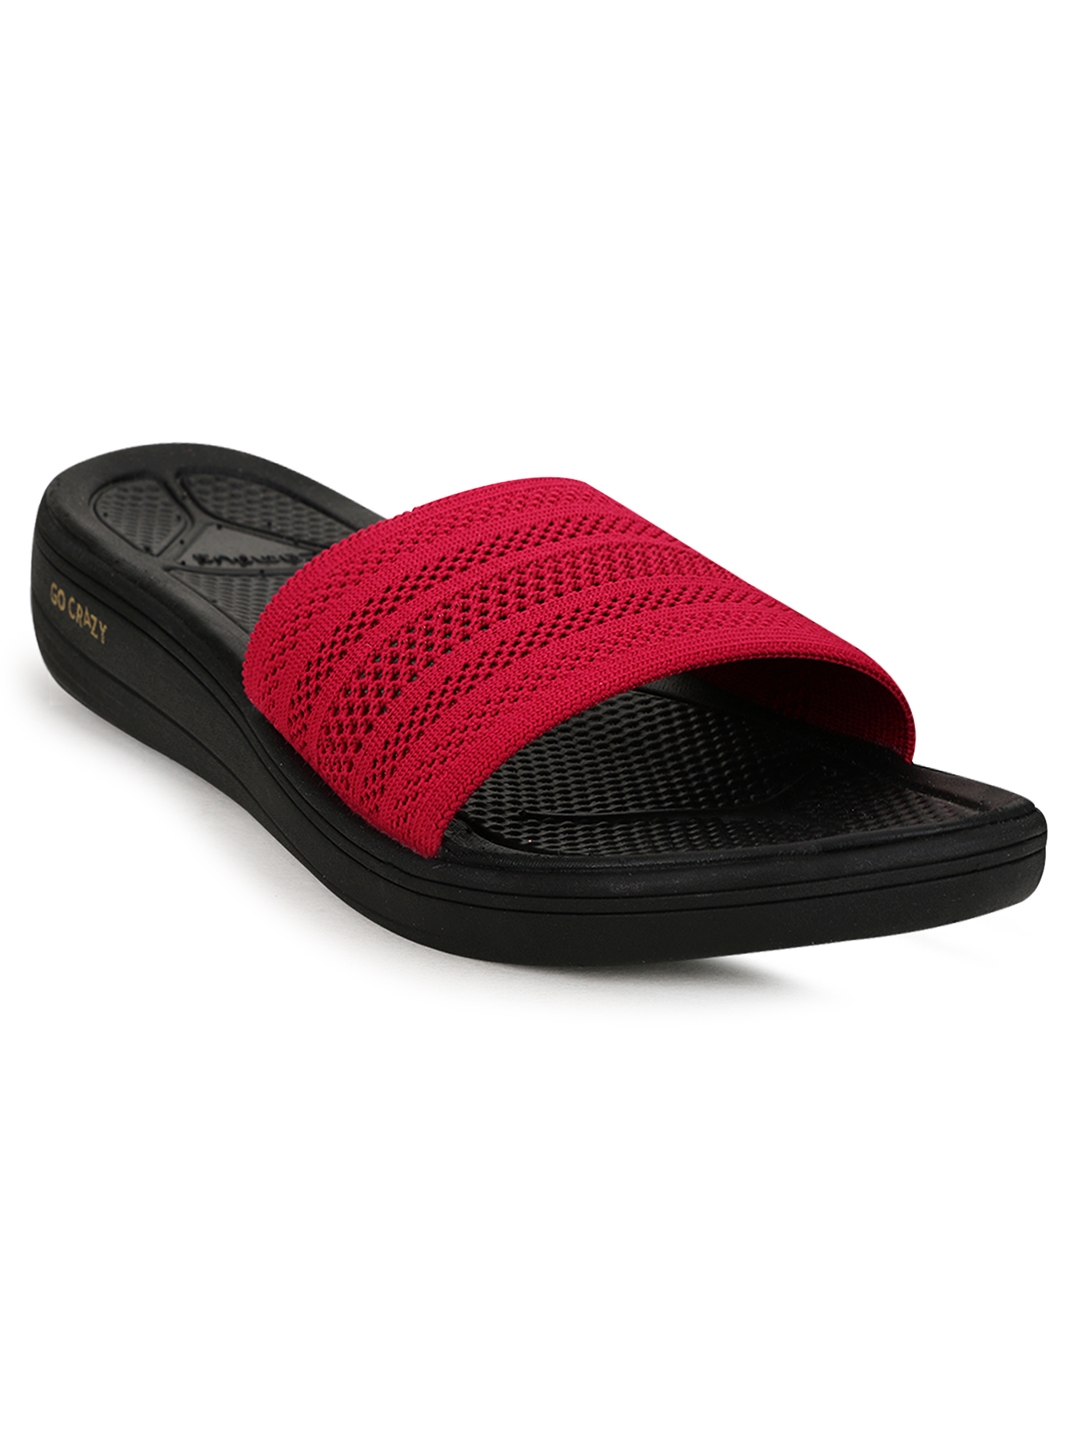 Campus Shoes | Red Flip-Flops